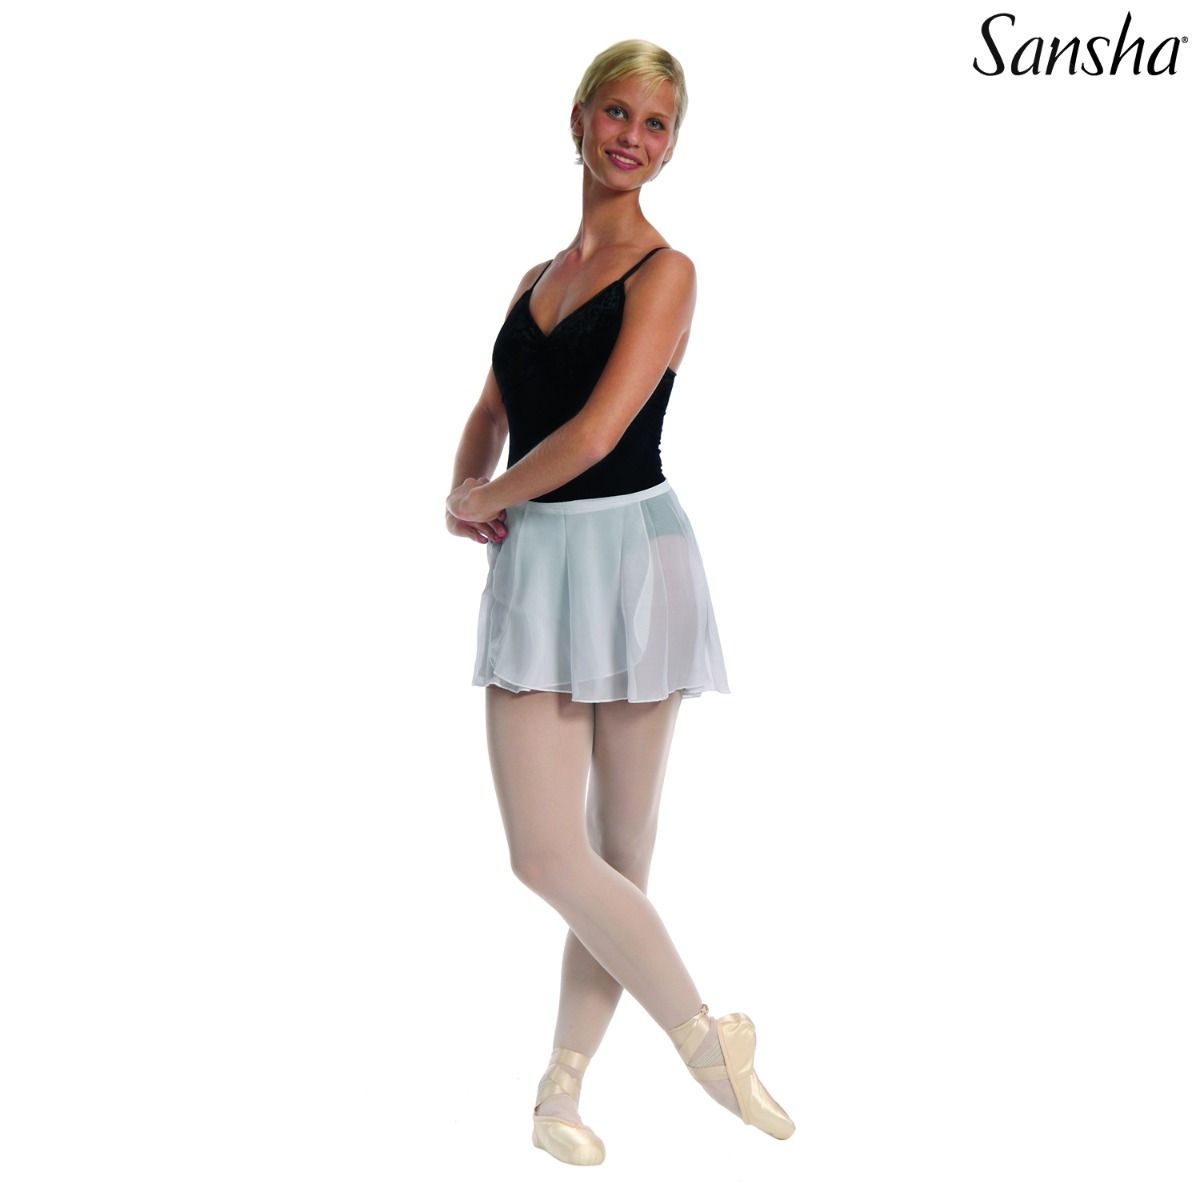 Sansha, vaaleansininen balettihame, Zephyr